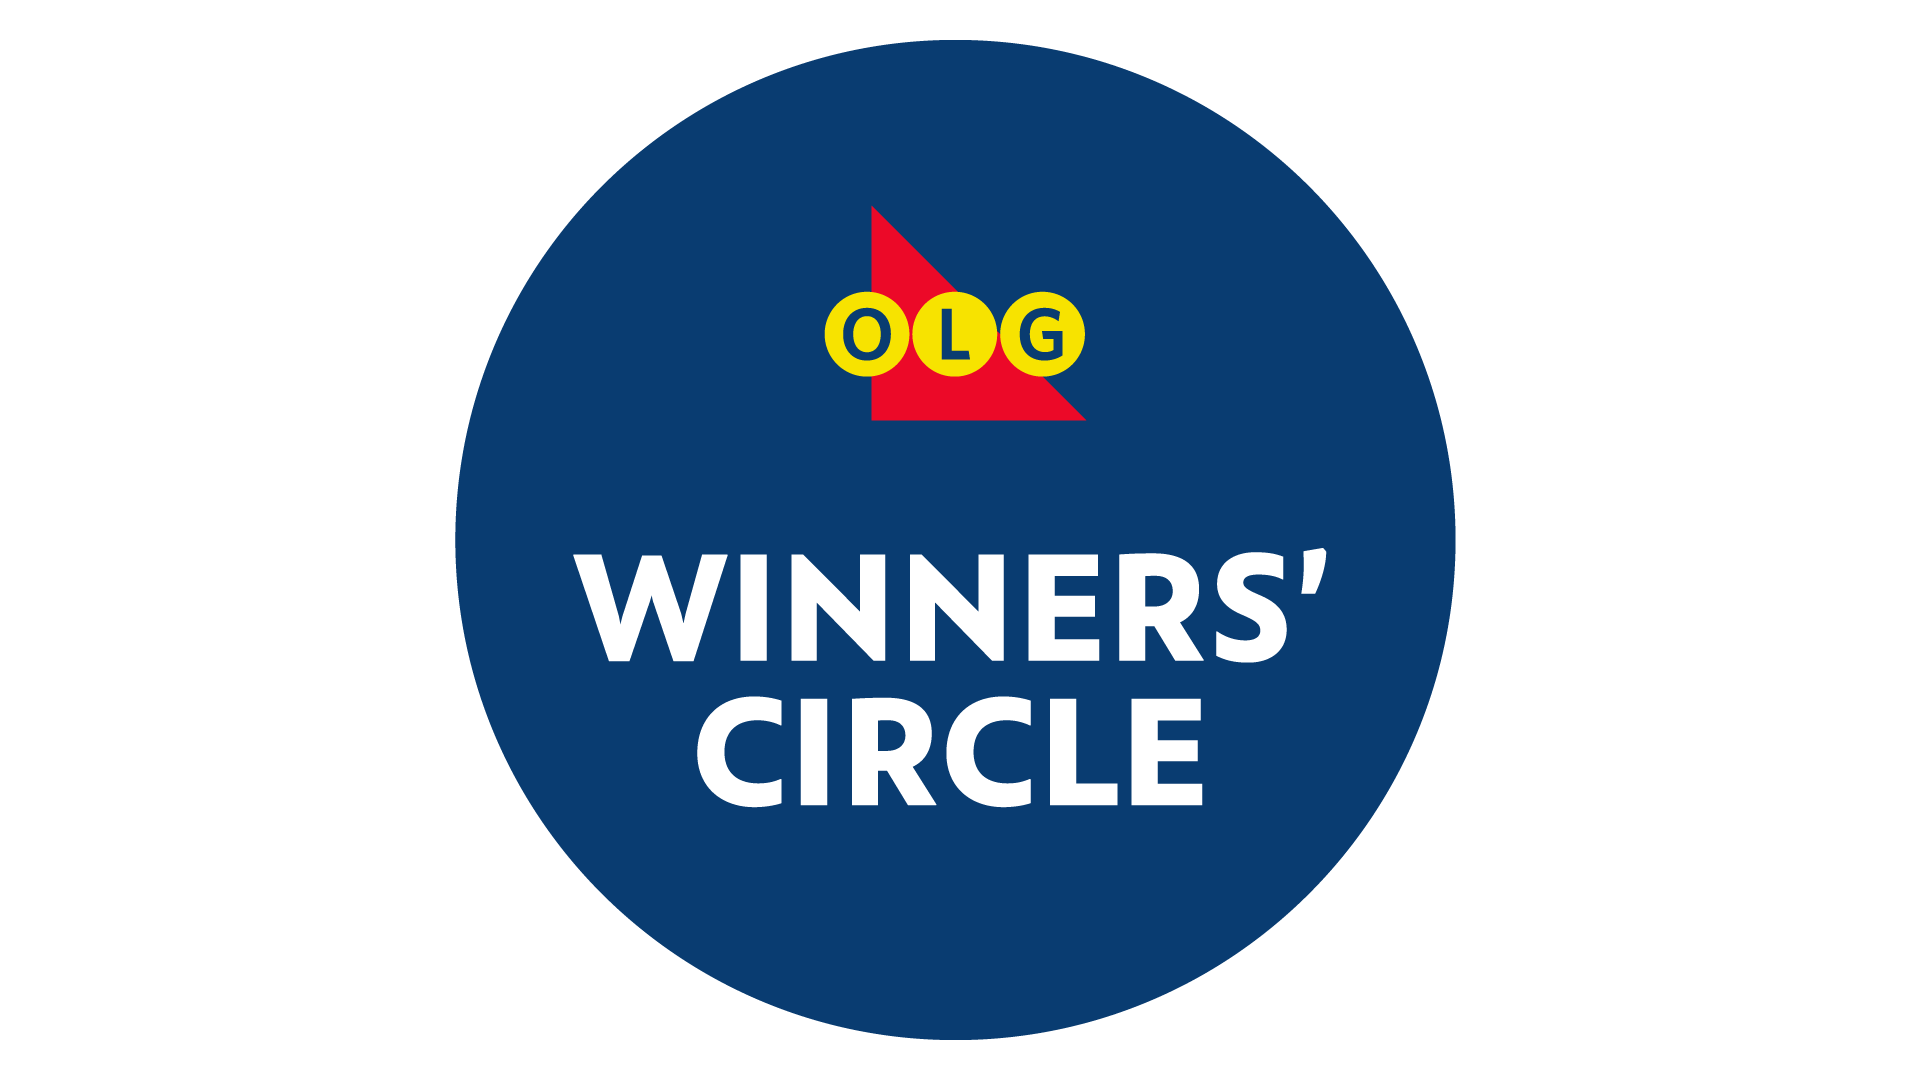 Winners Circle Olg